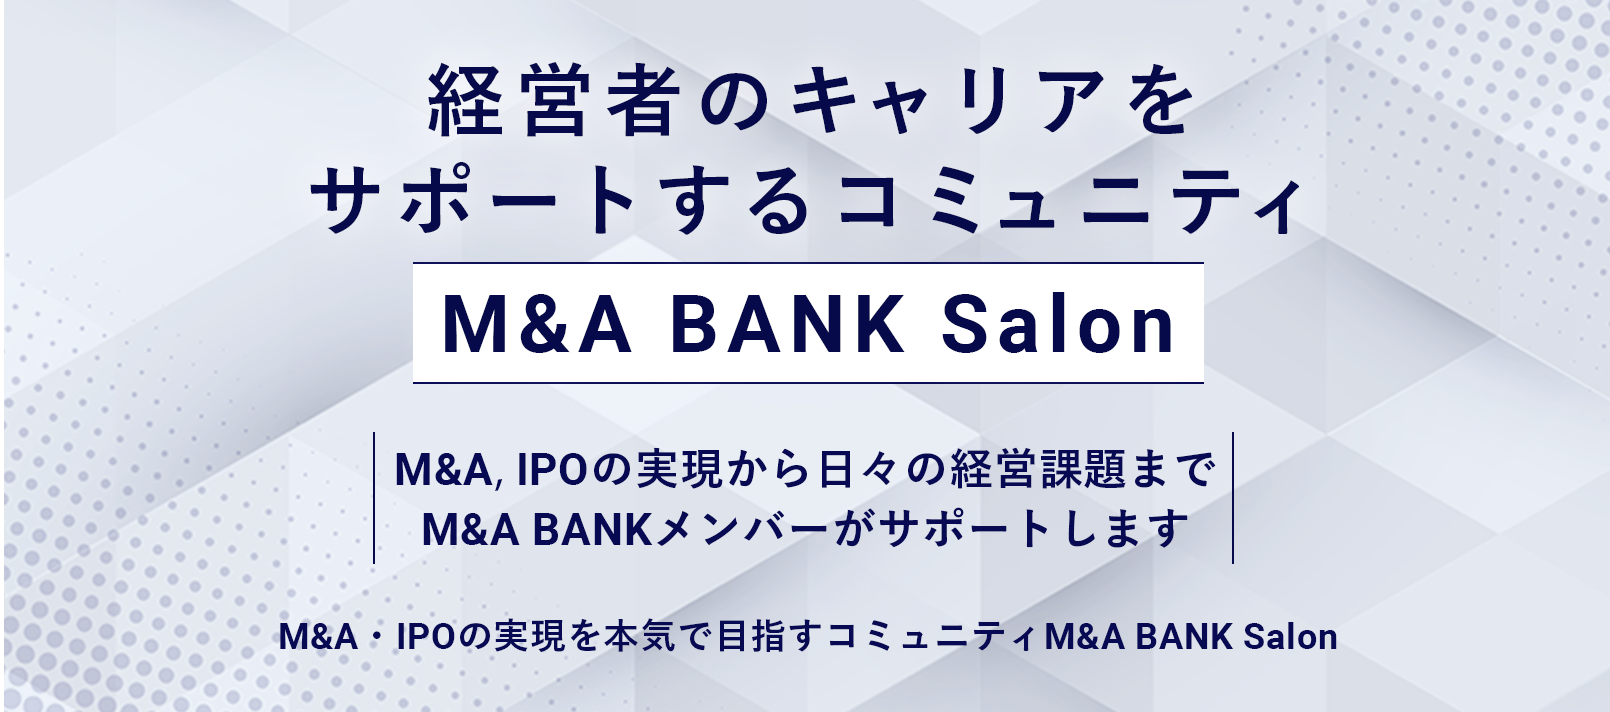 M&A・IPOを本気で実現させるためのサロン。第3期募集。2023年2月~6月末。100人限定。By M&A BANK